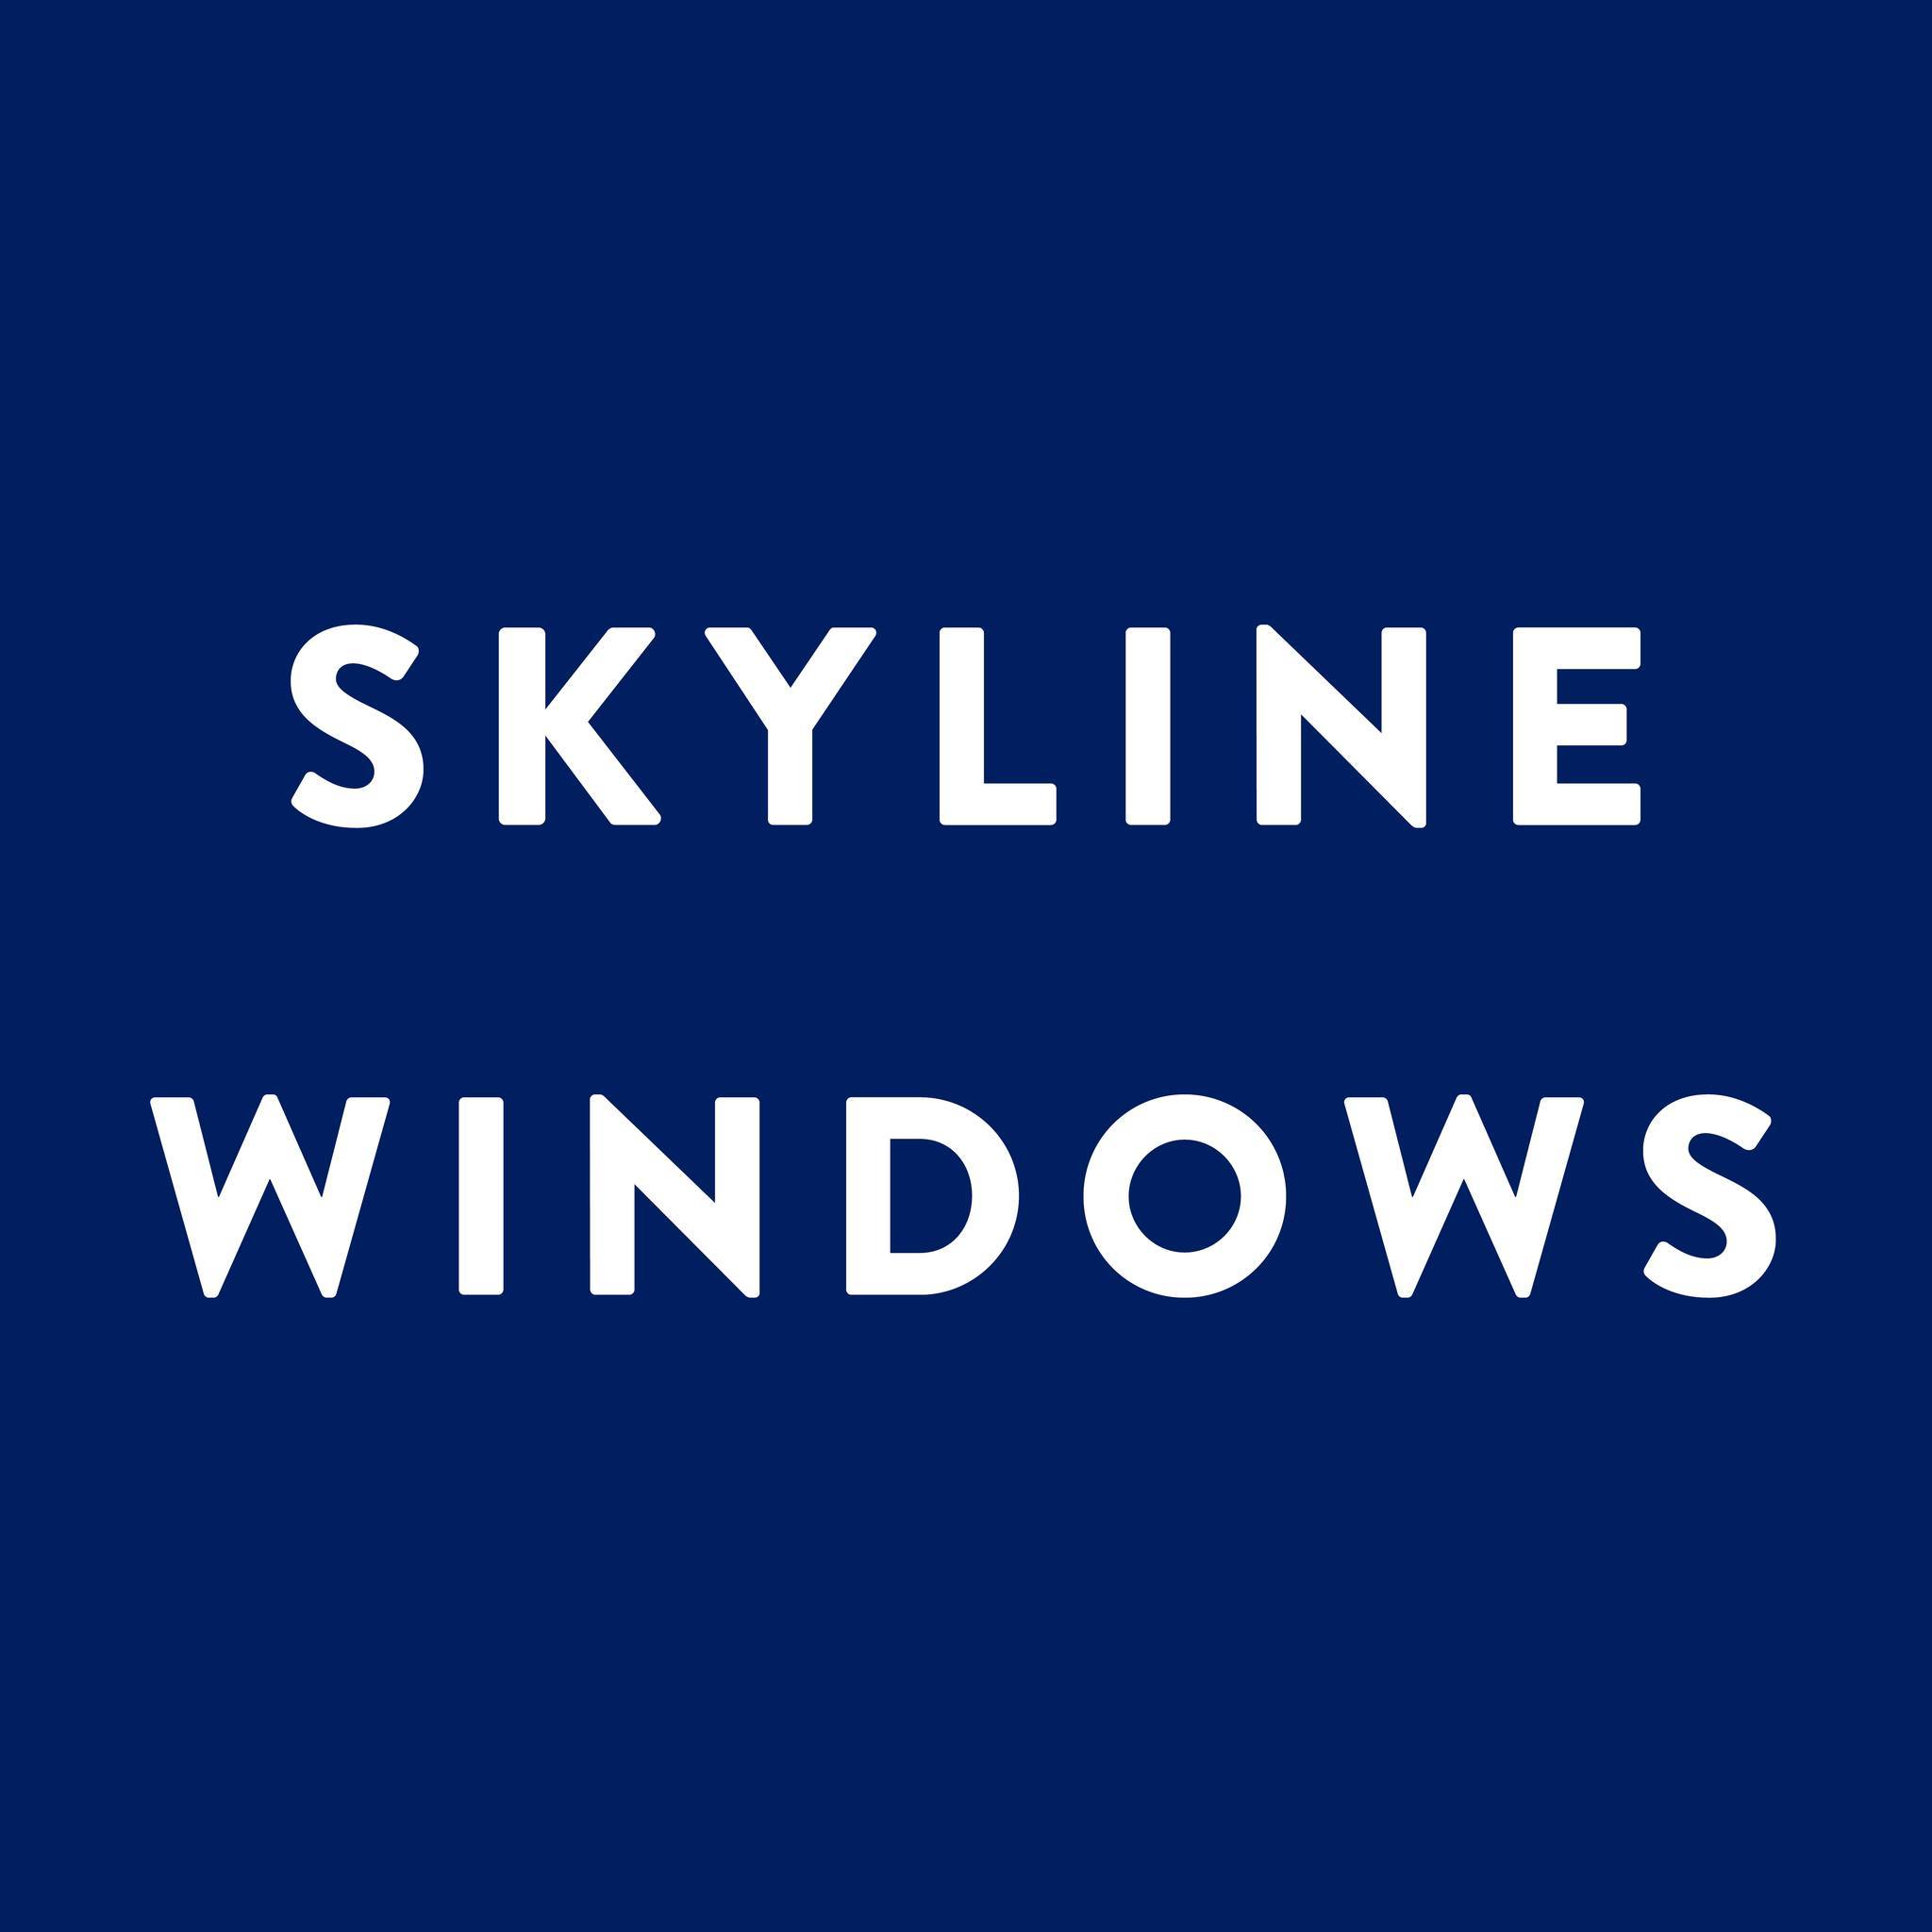 Skyline Windows